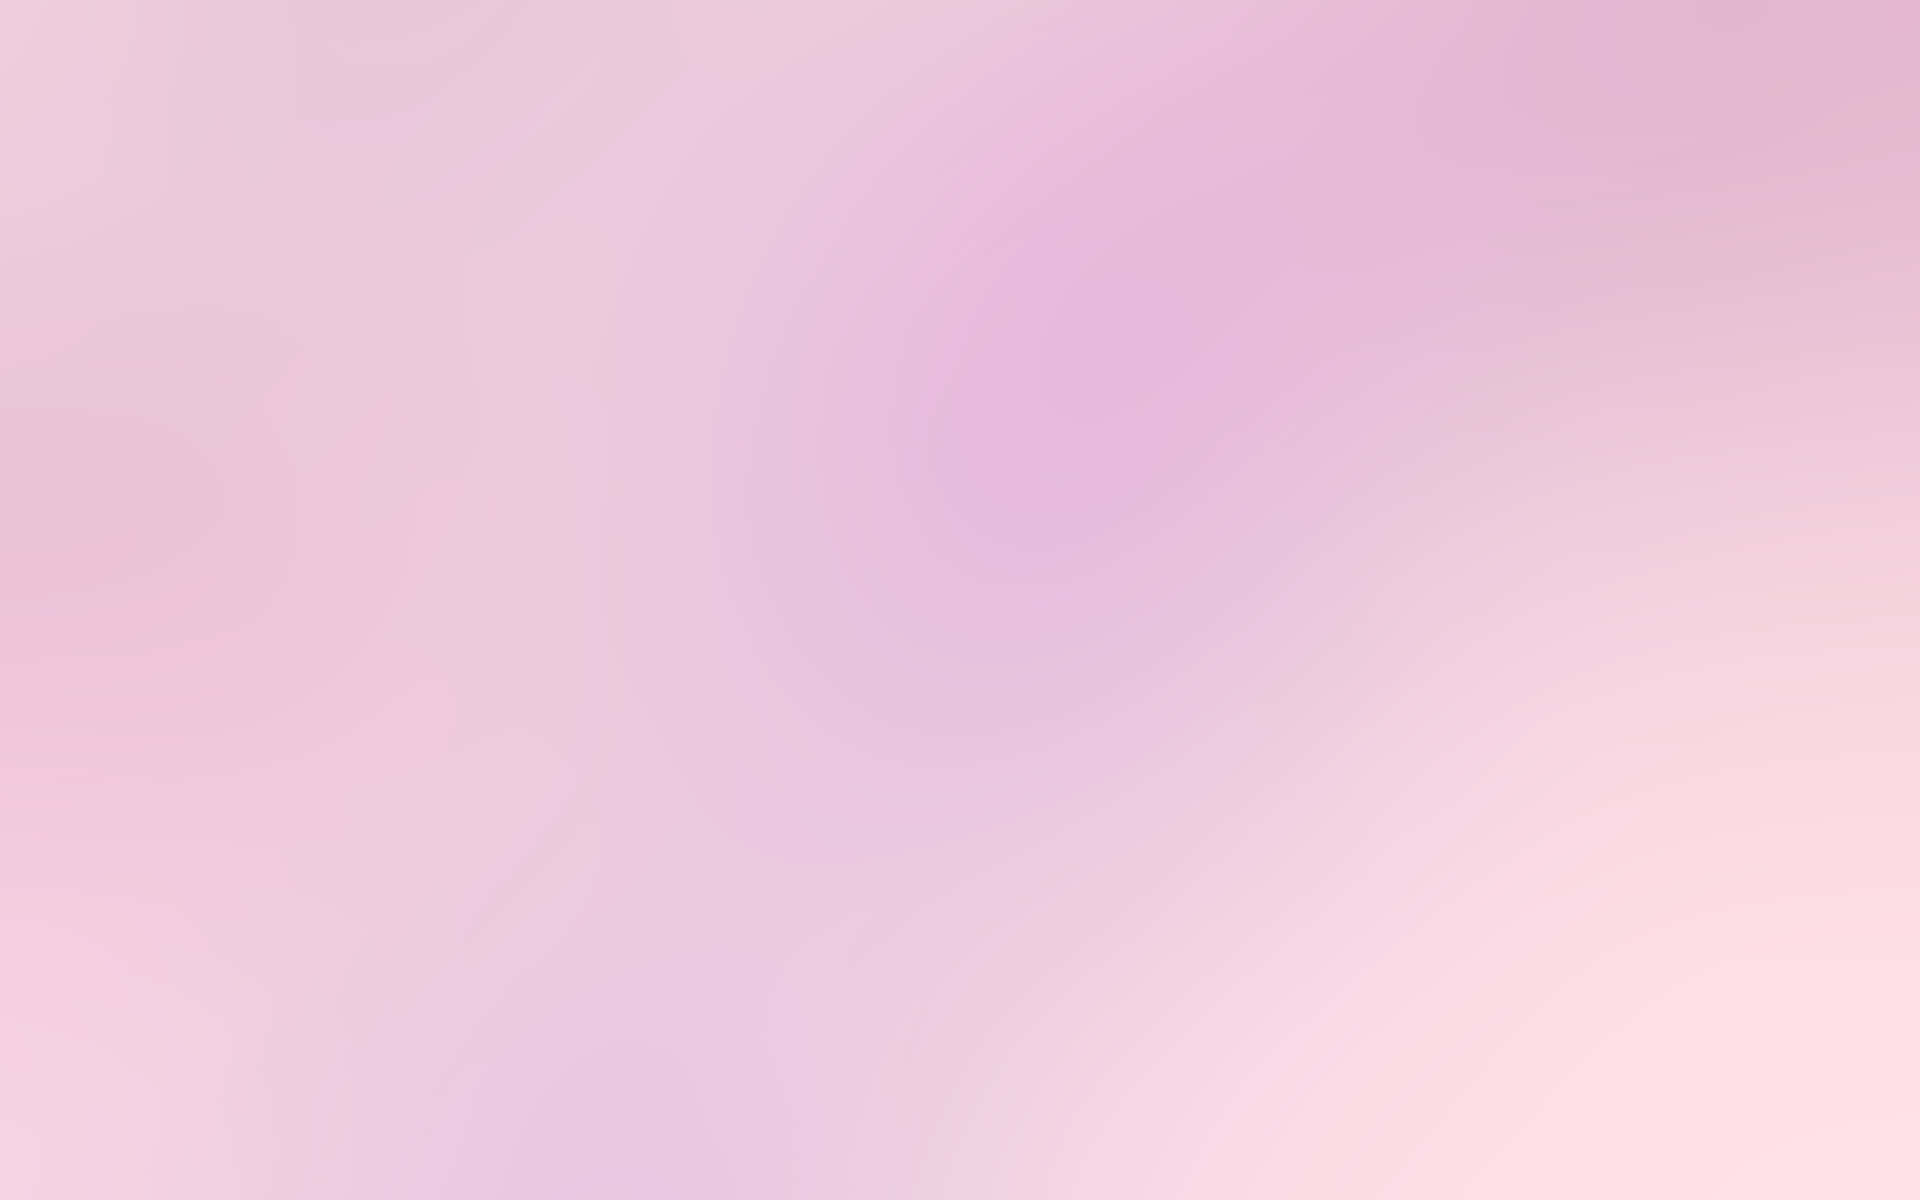 Sublime Soft Pink Background Wallpaper